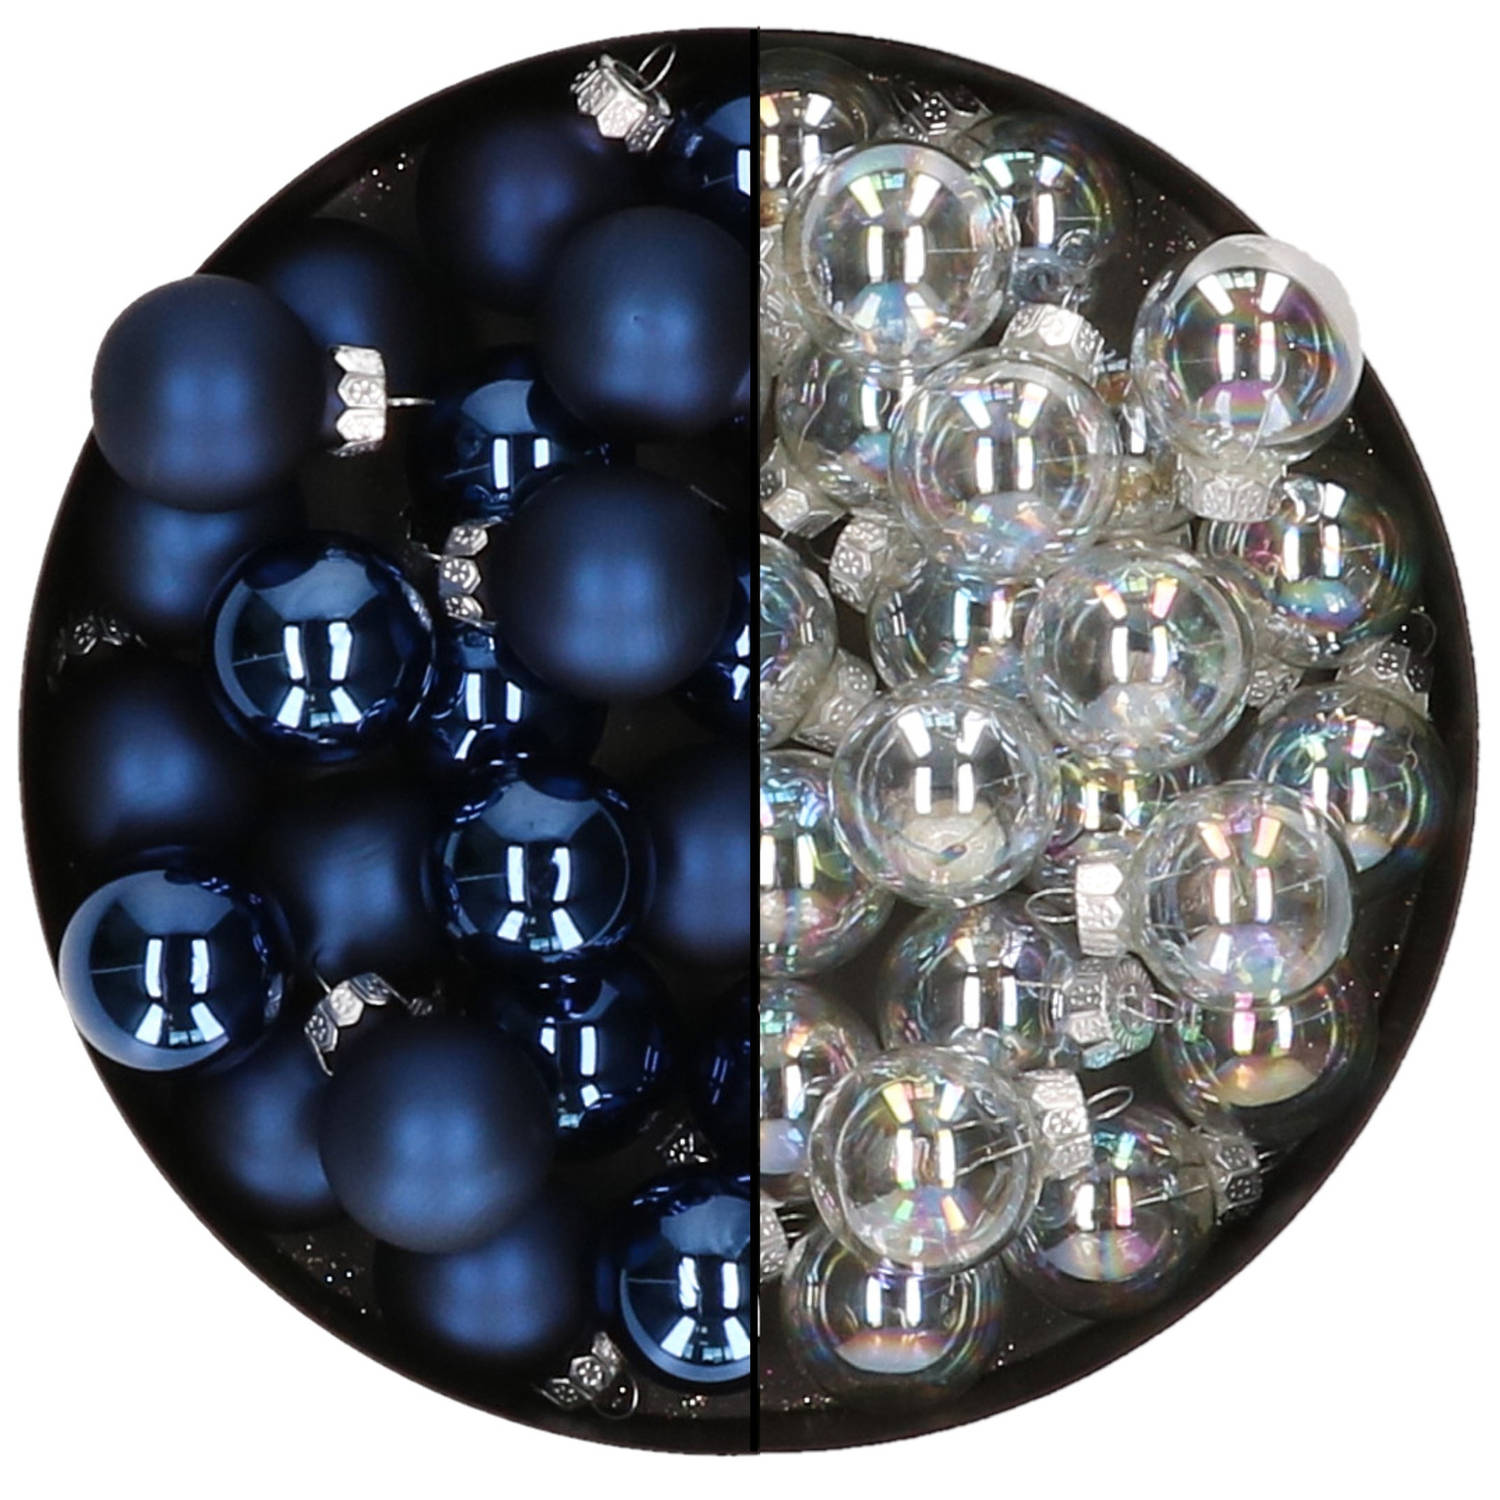 Mini kerstballen 48x- donkerblauw-transparant parelmoer 2,5 cm glas Kerstbal